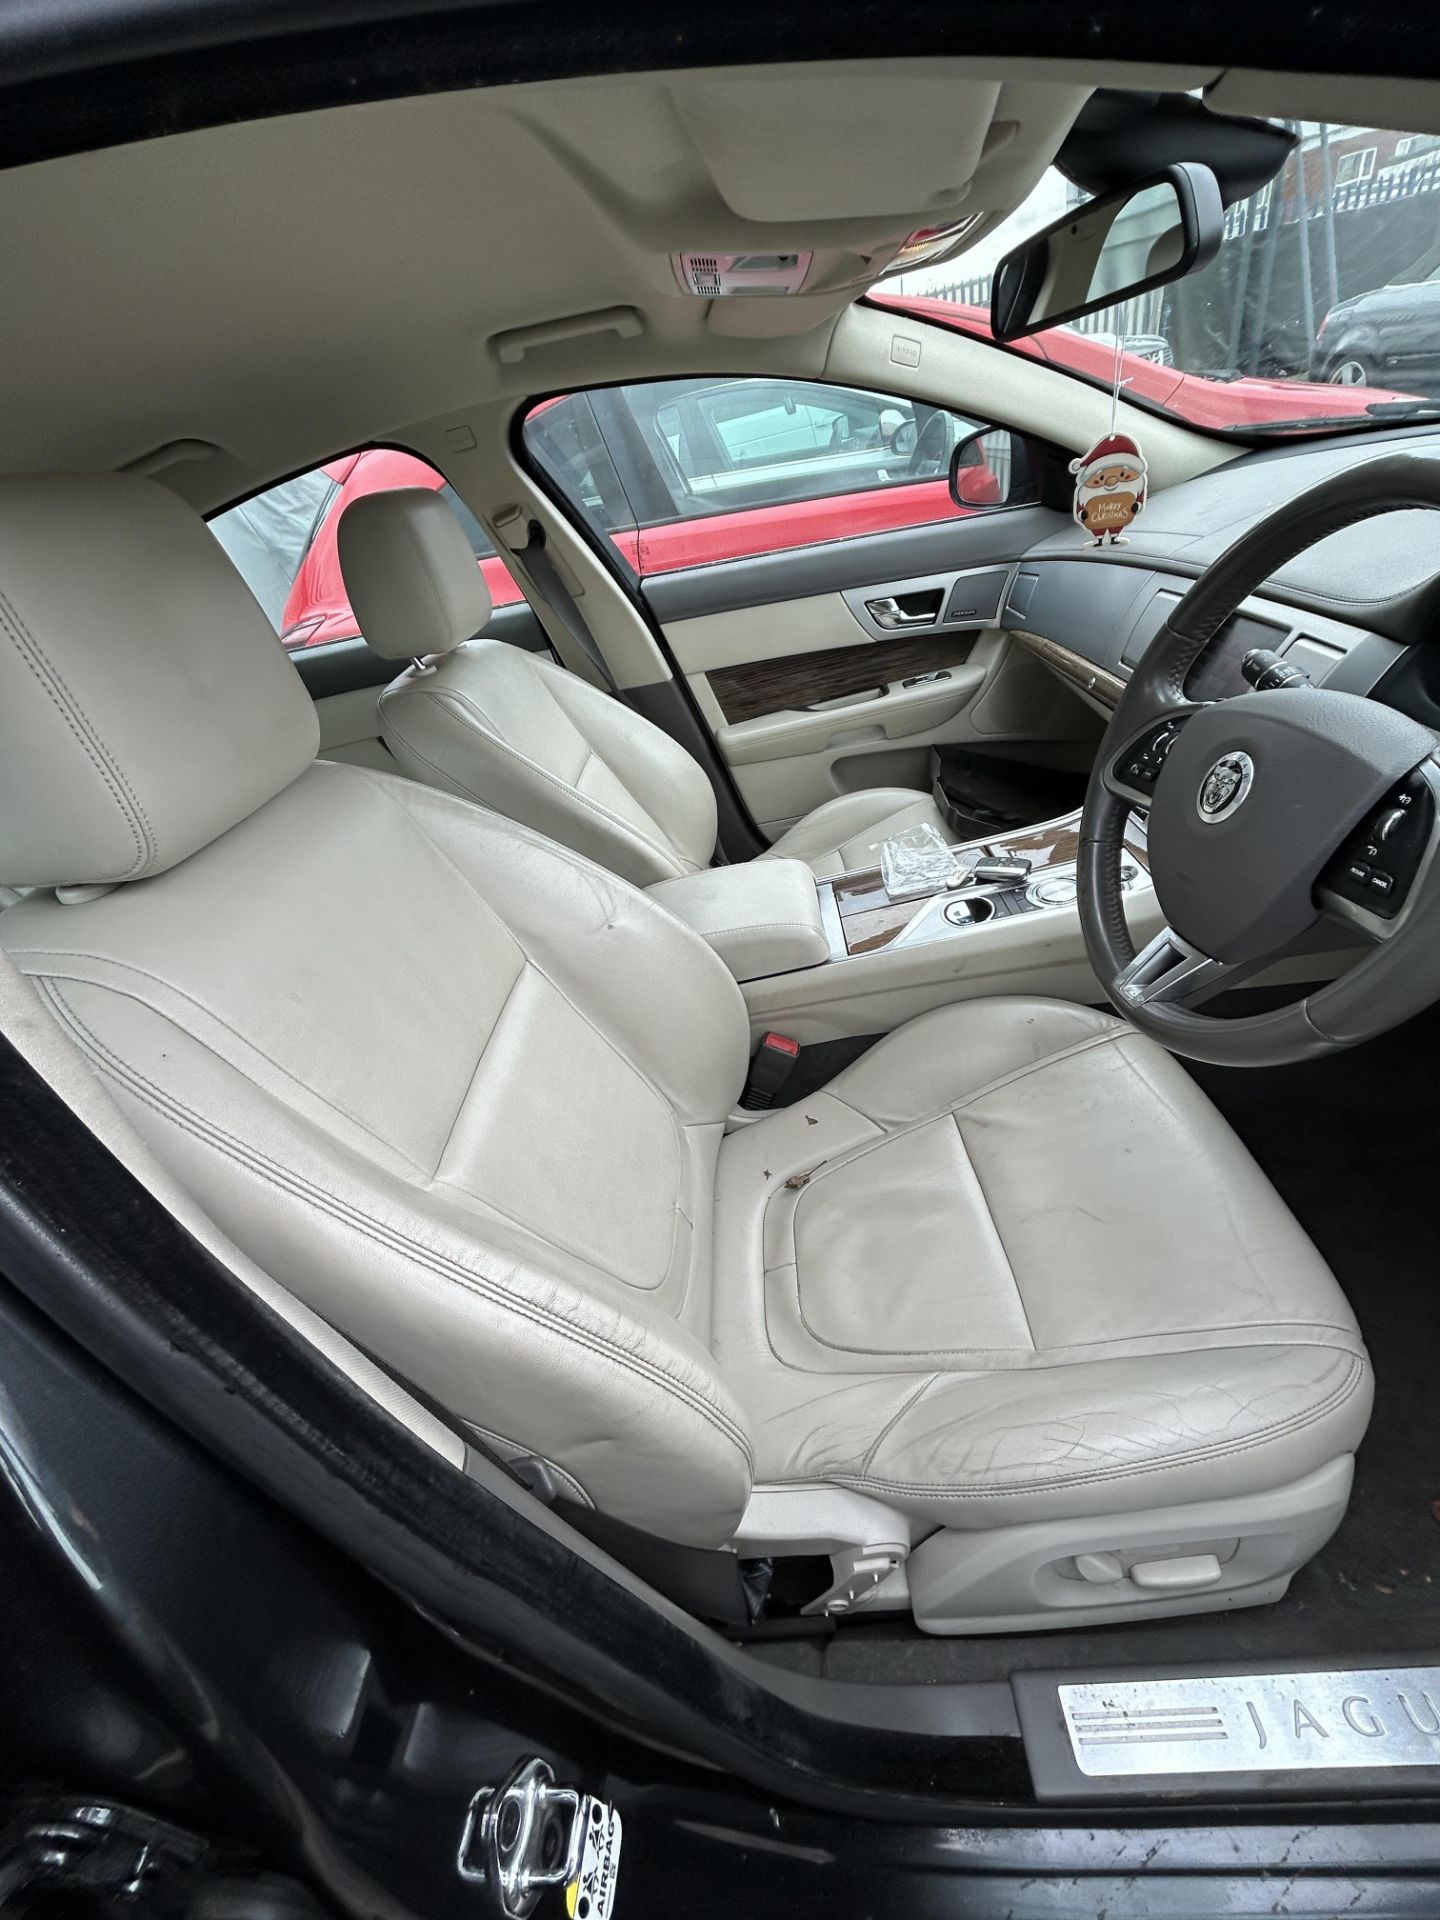 Jaguar XF Premium Luxury D Auto Diesel 4 Door Saloon | PO13 TOH | 165,697 Miles - Image 5 of 9